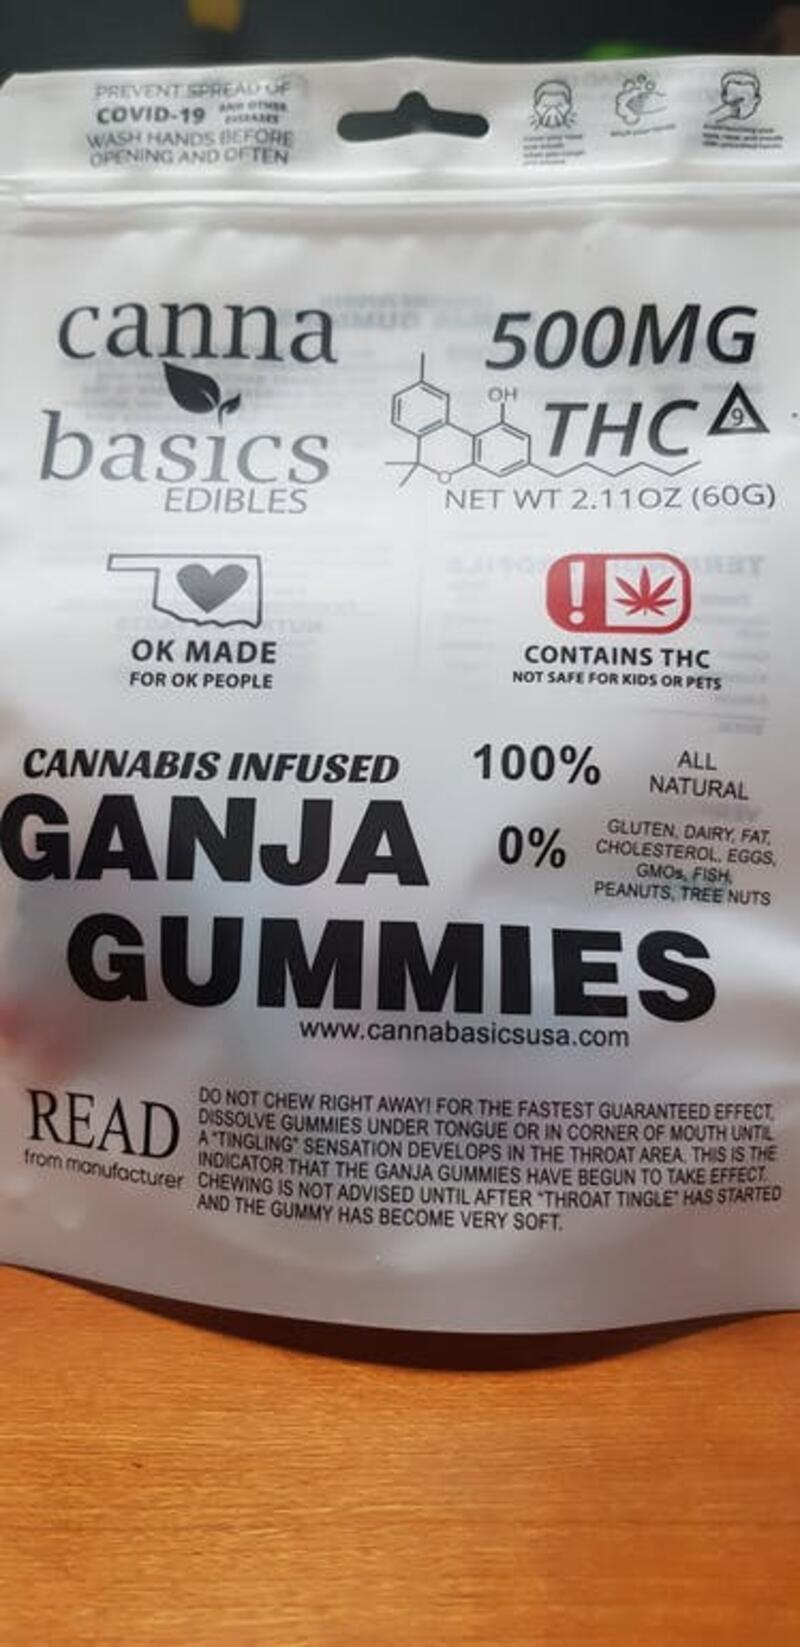 Canna Basics Ganja Gummies 500MG